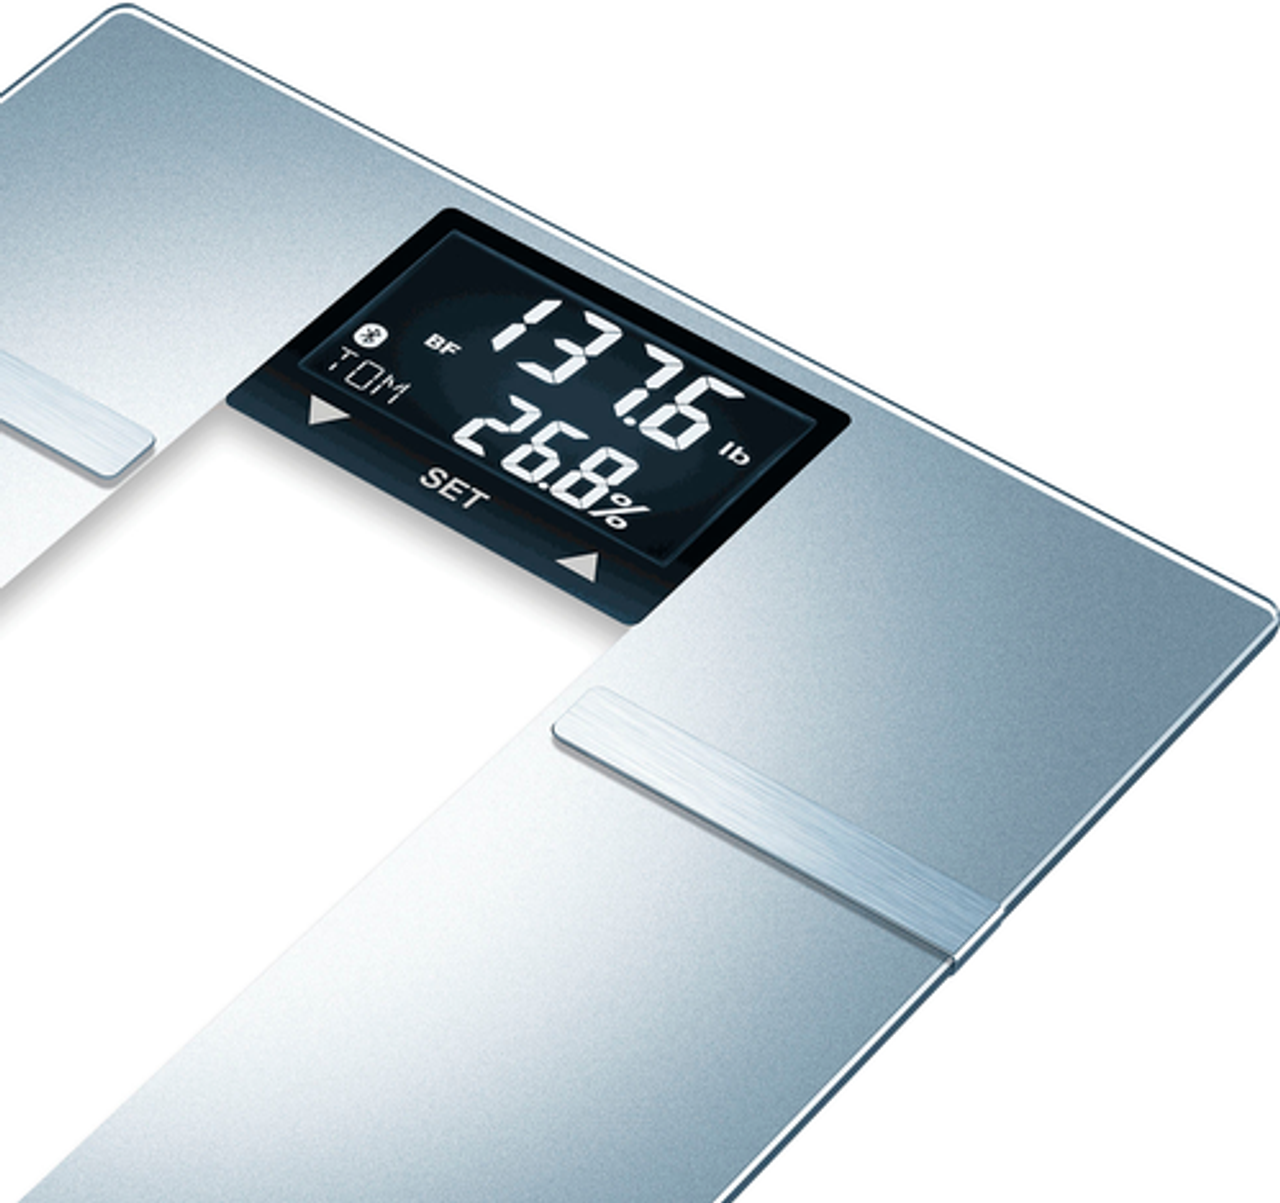 Beurer - Bluetooth Digital Body Weight Scale - Silver